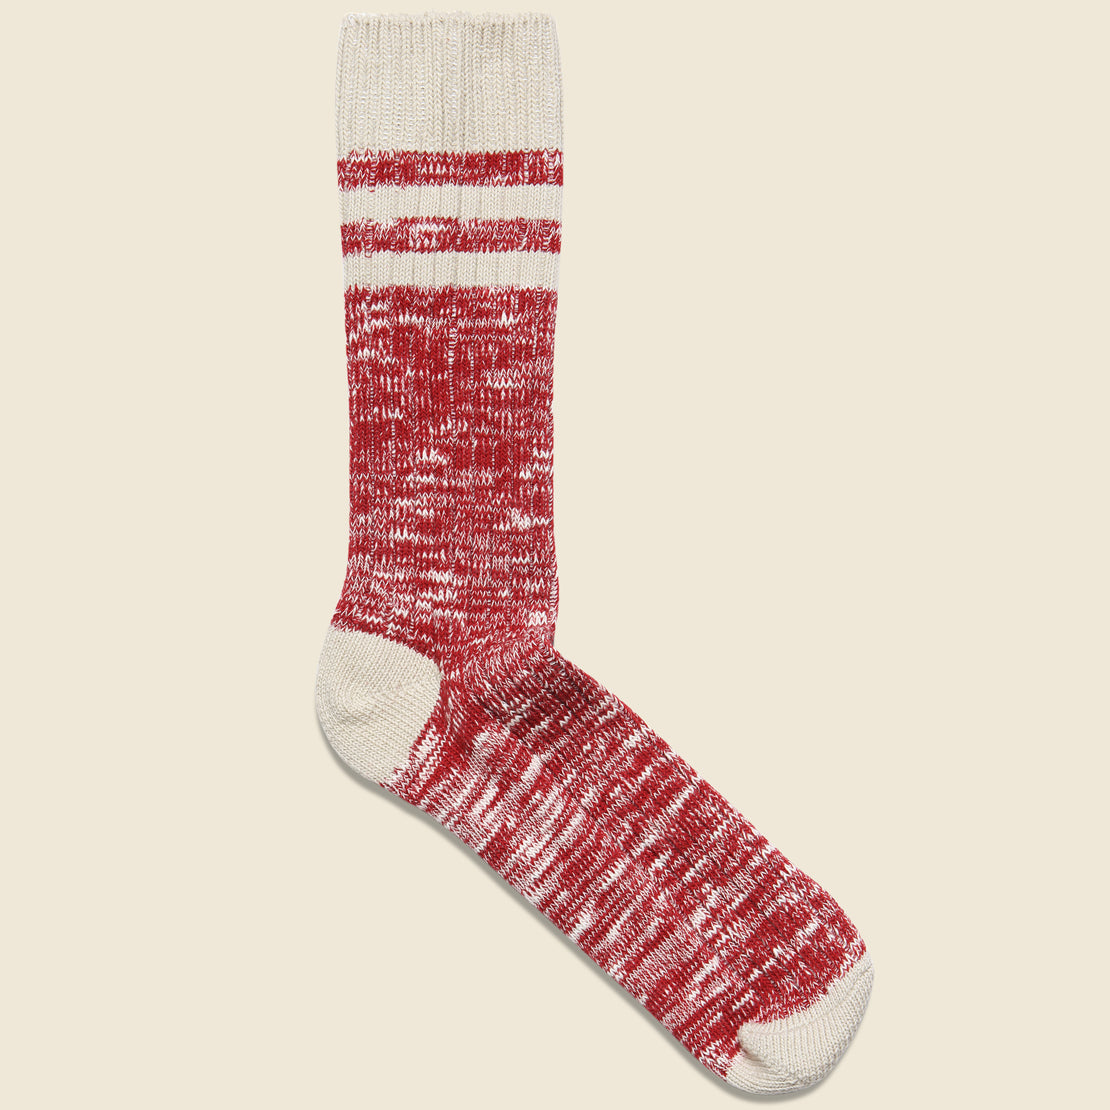 Richer Poorer Stitcher Sock - Red/Oatmeal